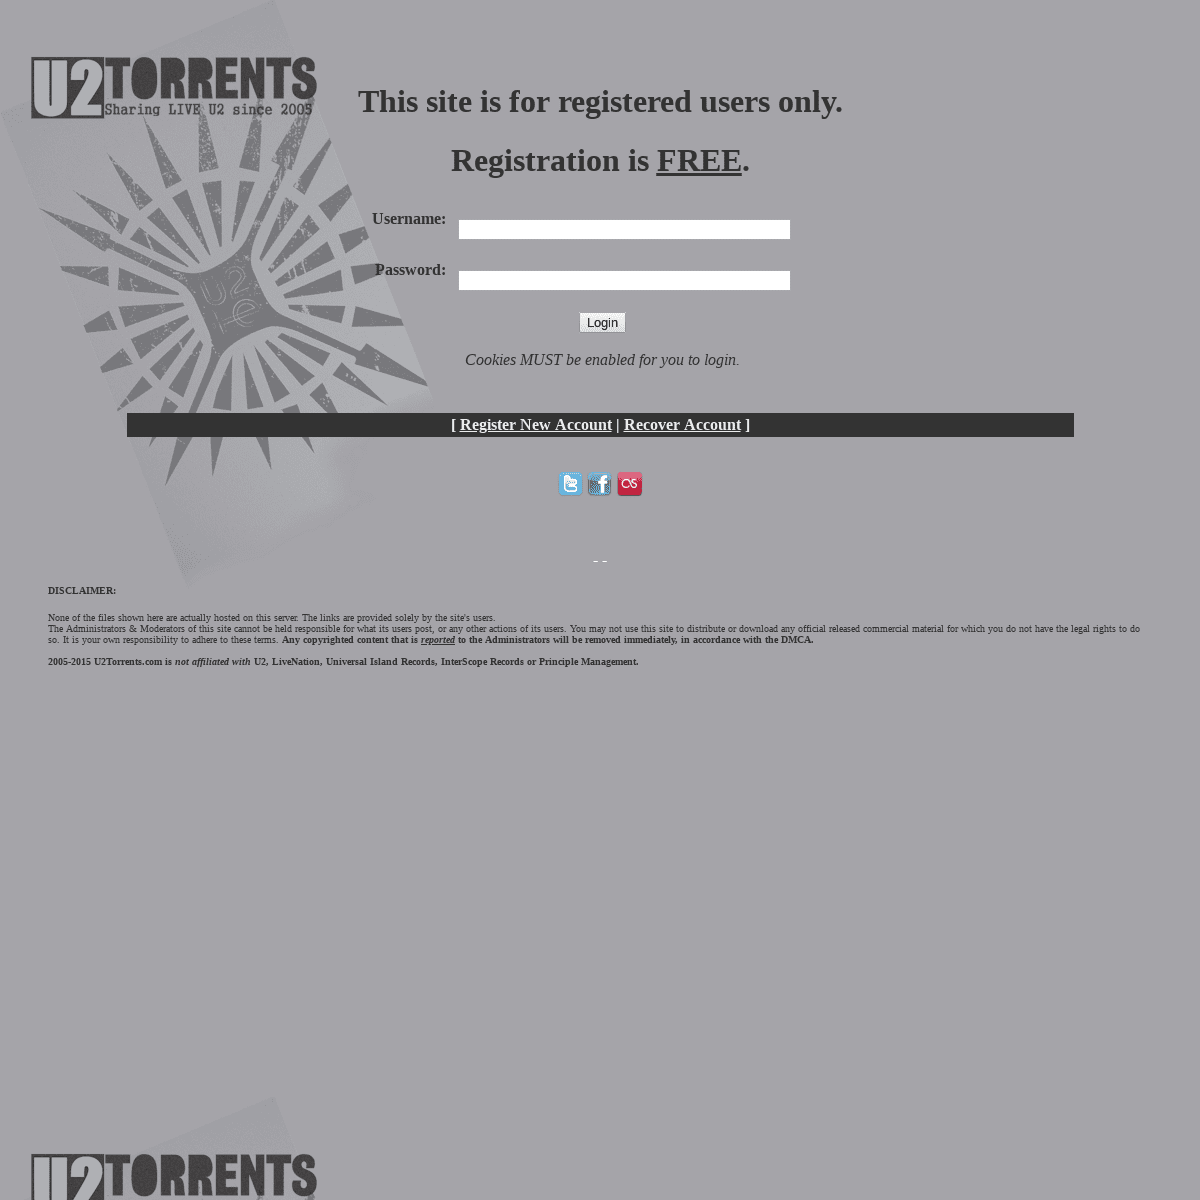 Live U2 Bootlegs - U2Torrents.com